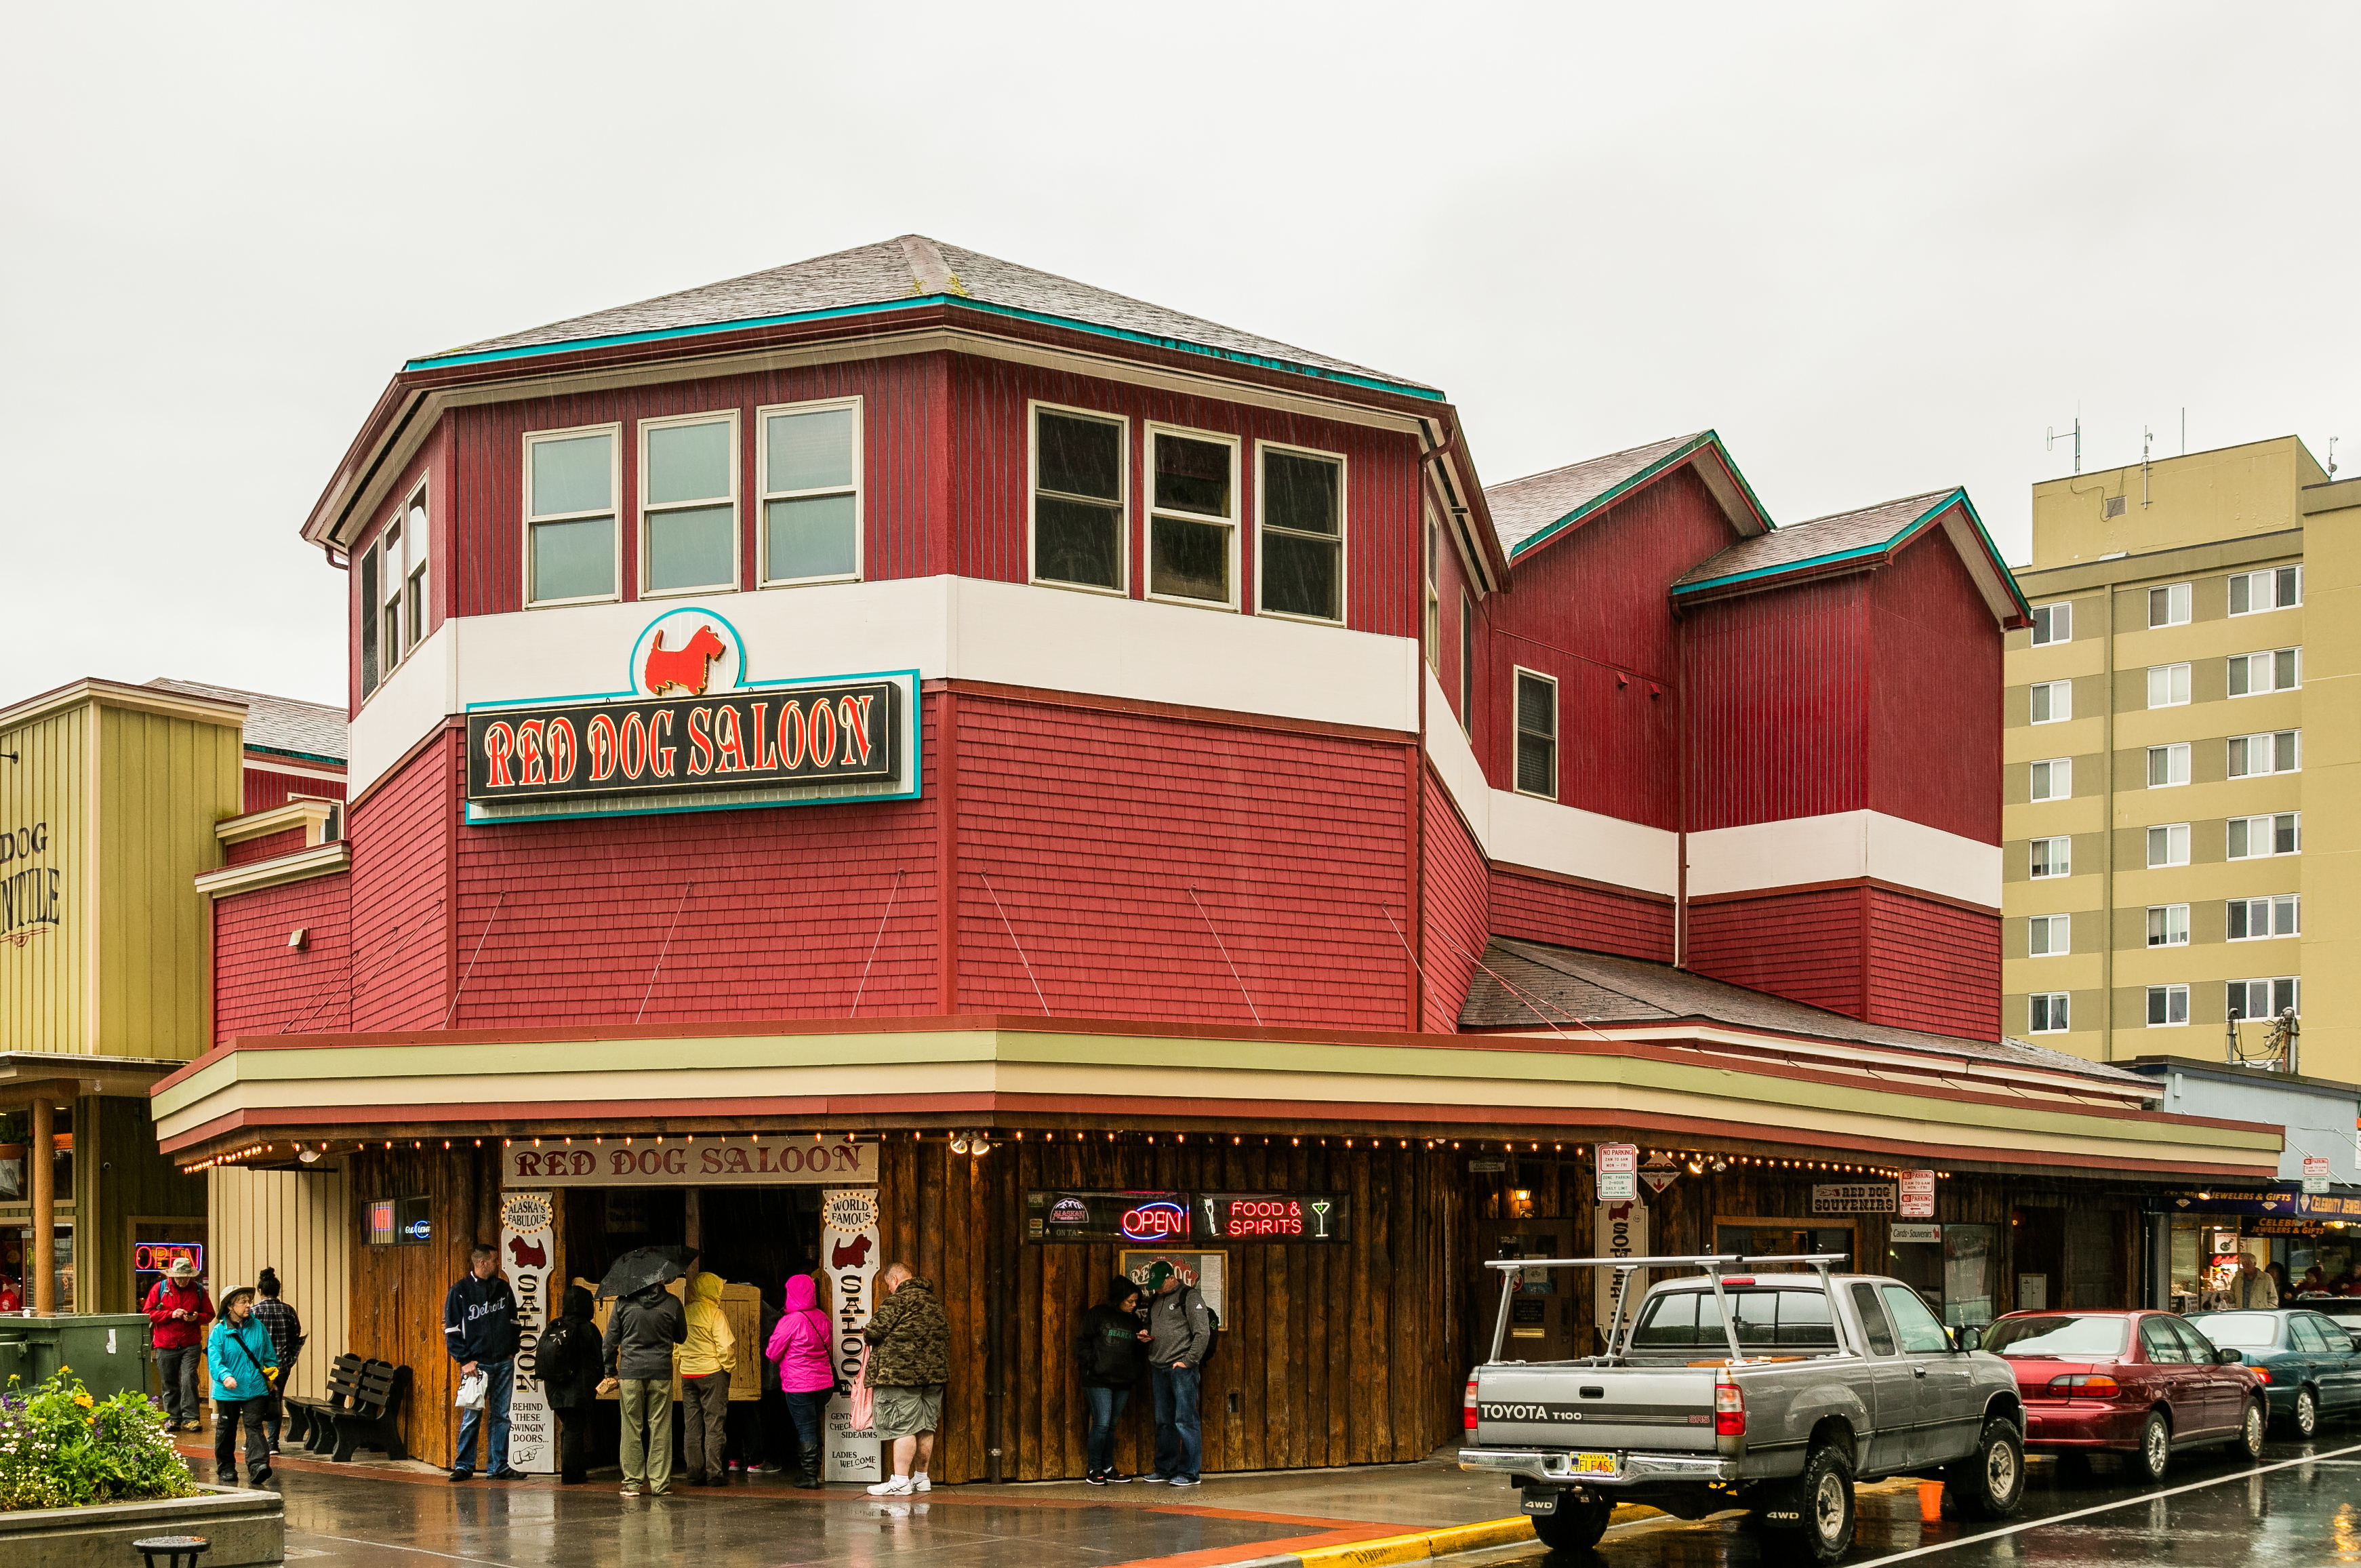 Red Dog Saloon, Juneau, Alaska, Estados Unidos, 2017-08-17, DD 23